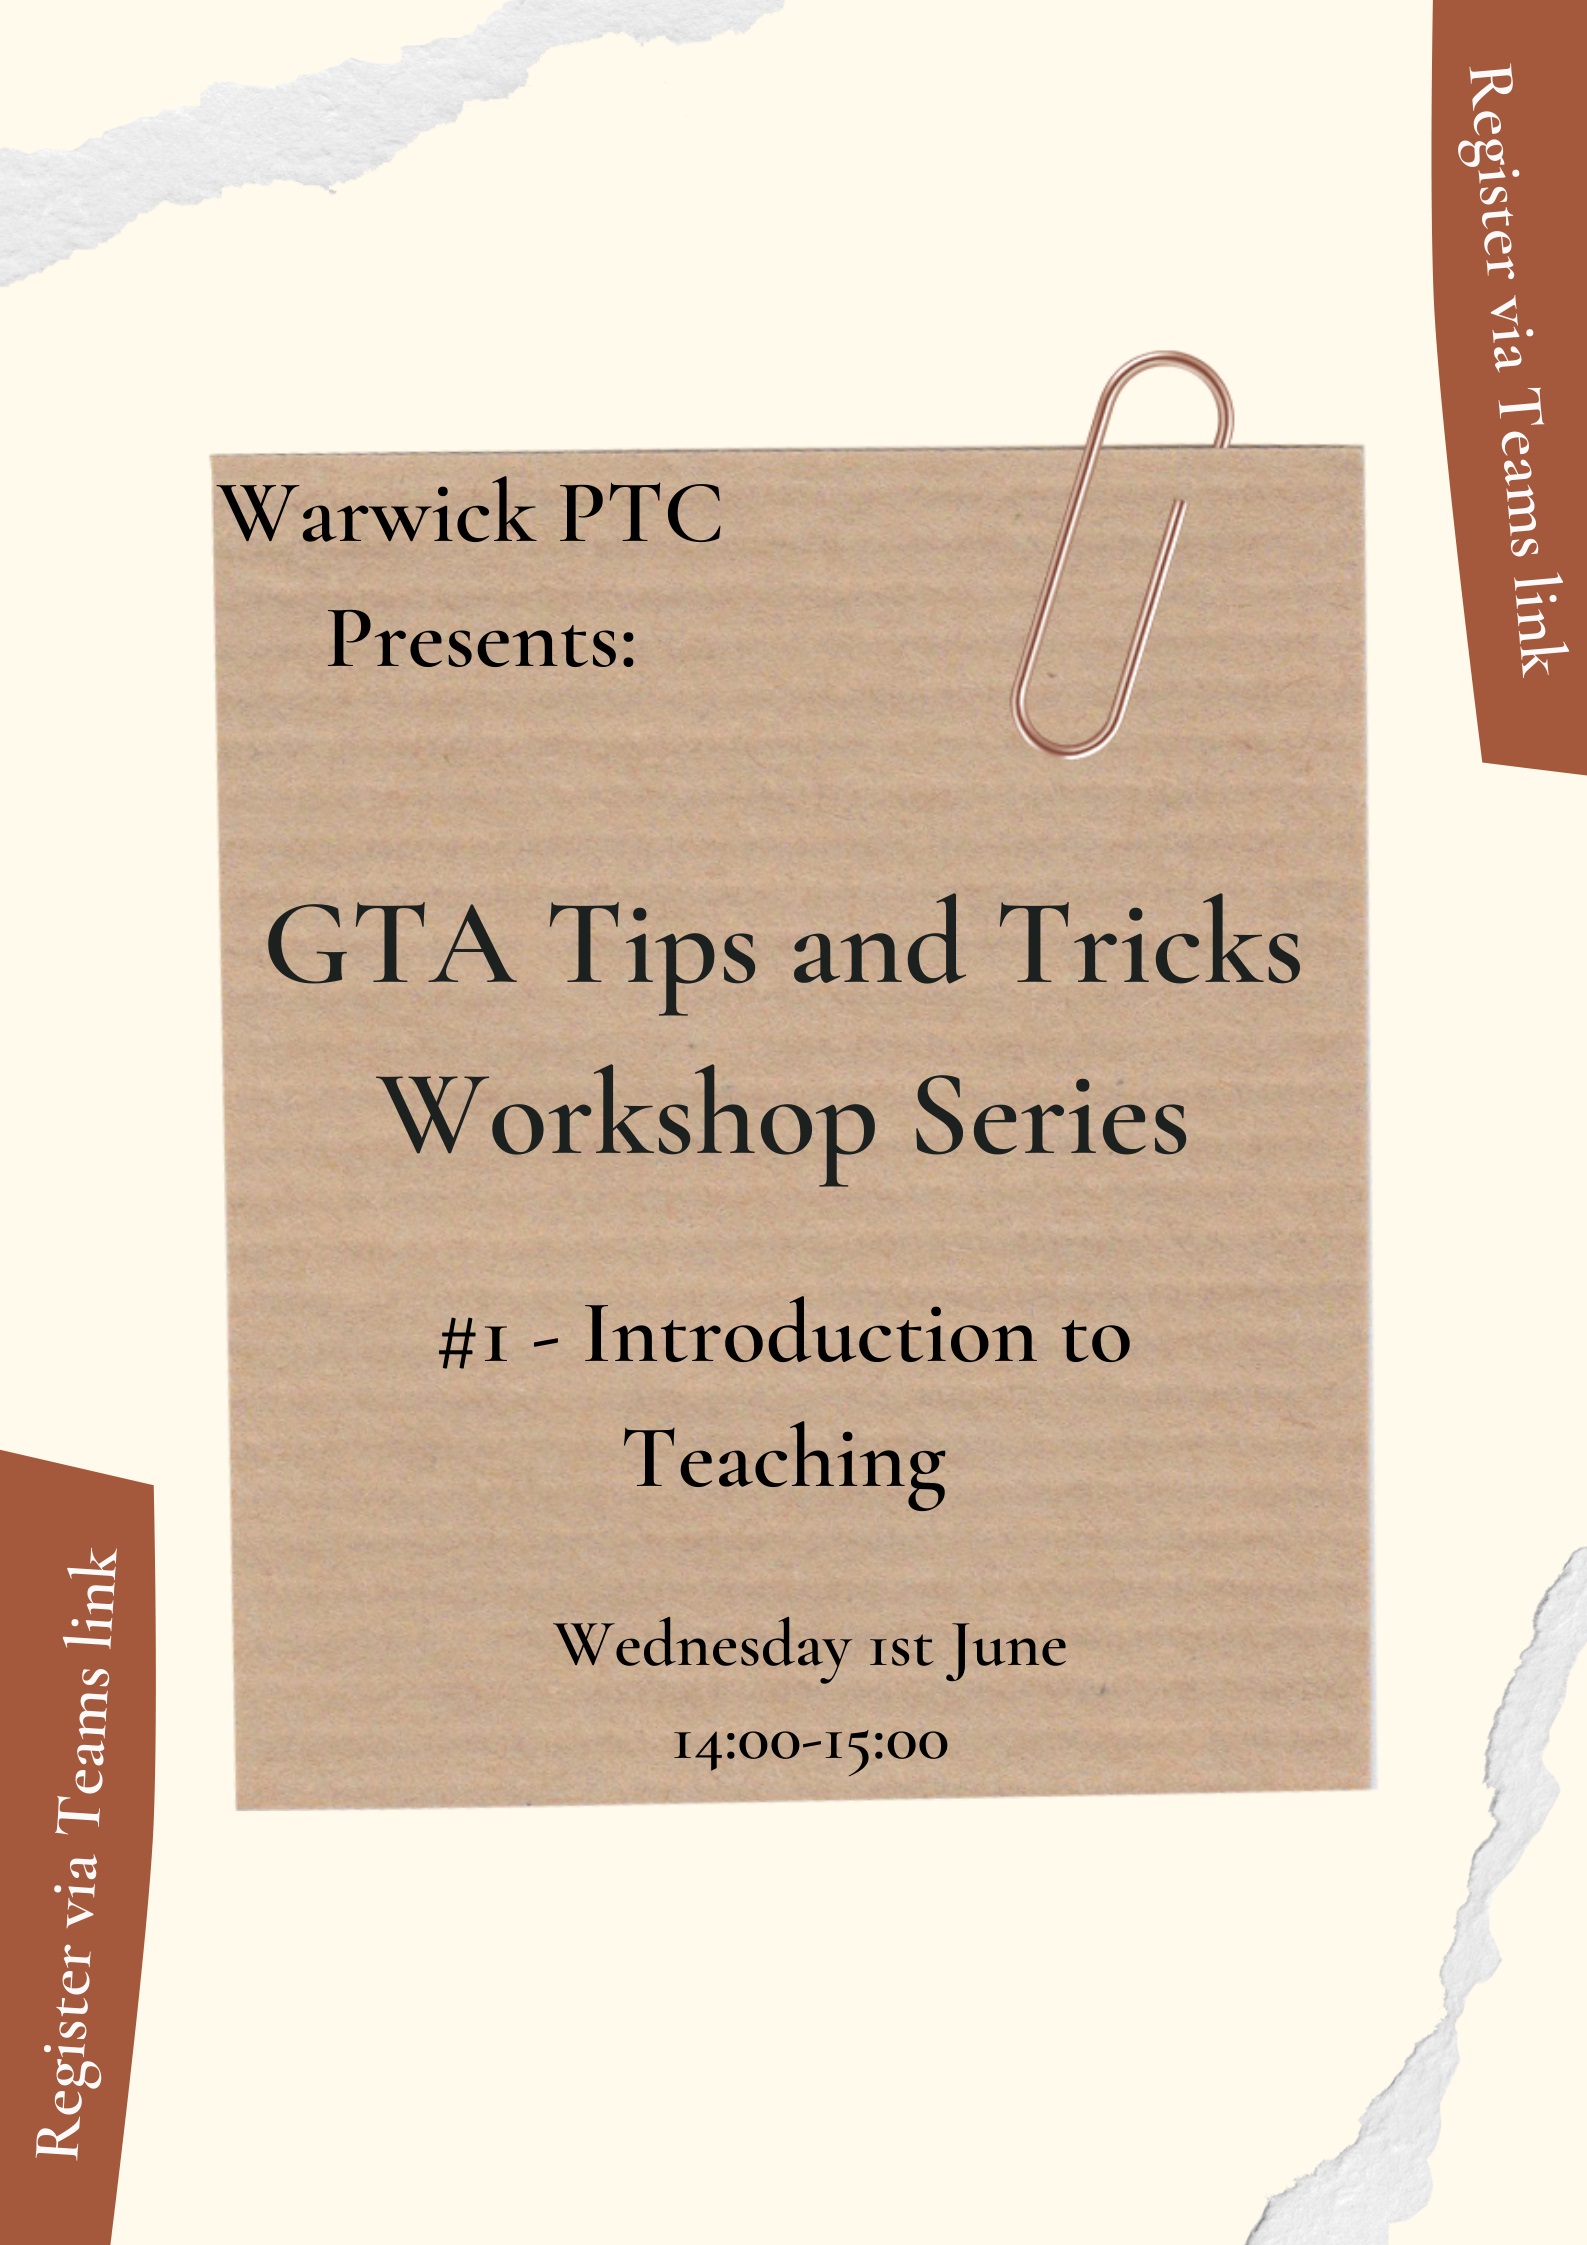 Event poster - GTA Tips and Tricks Workshop